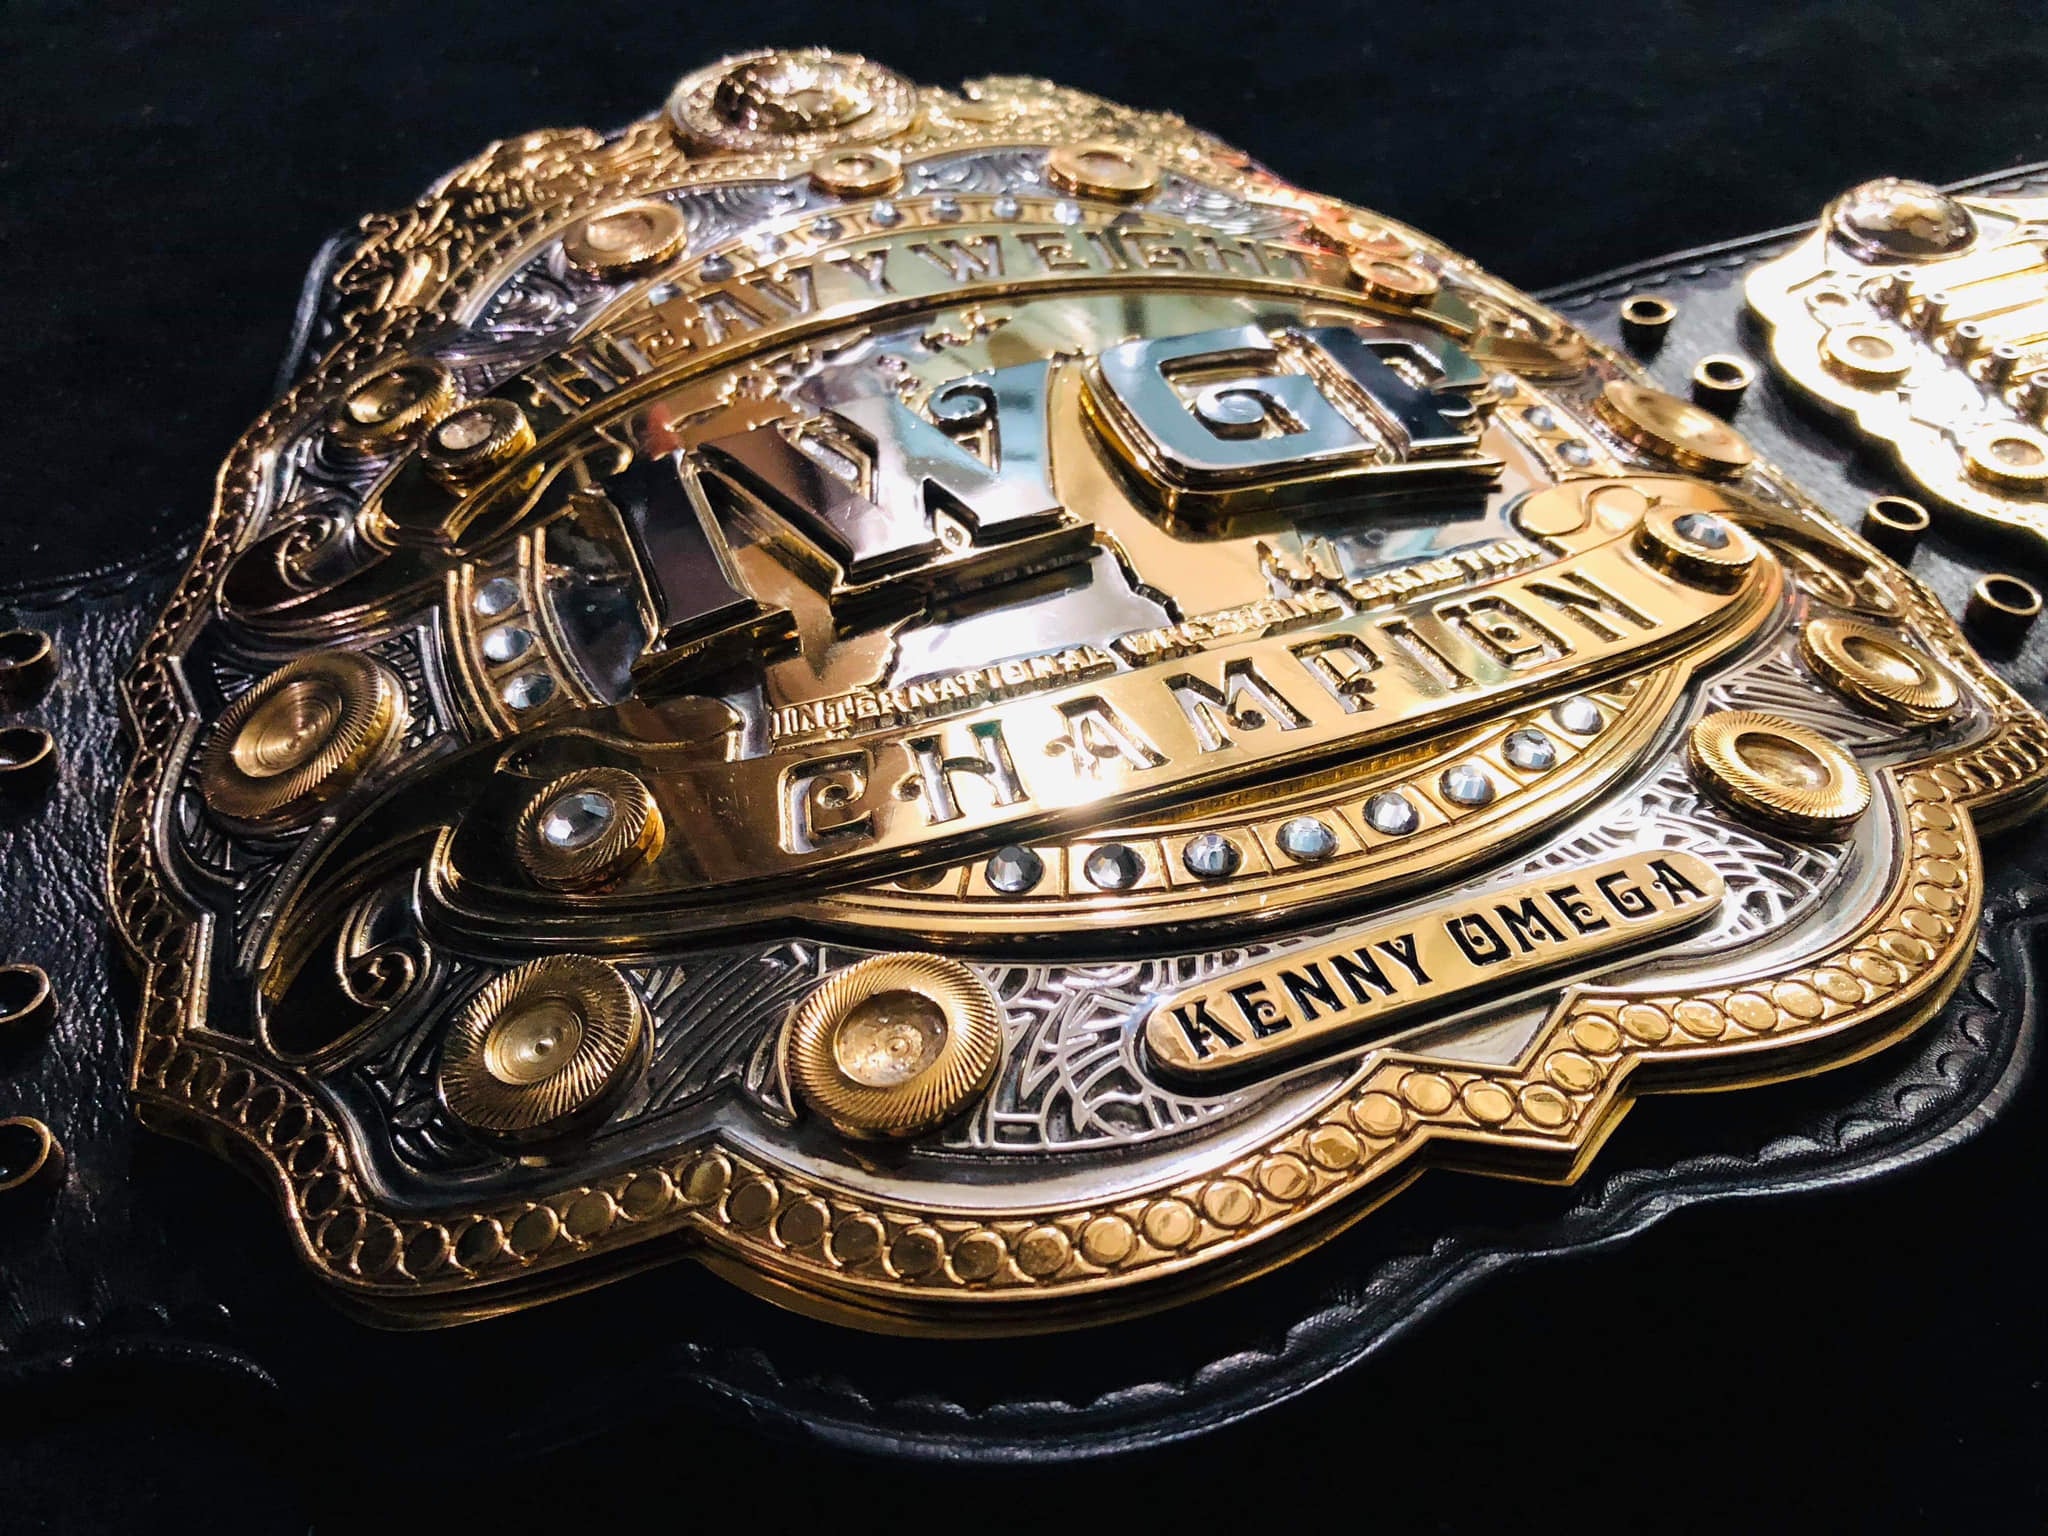 iwgp-heavyweight-championship-belt-v4-3mm-layer-adult-size-njpw-title